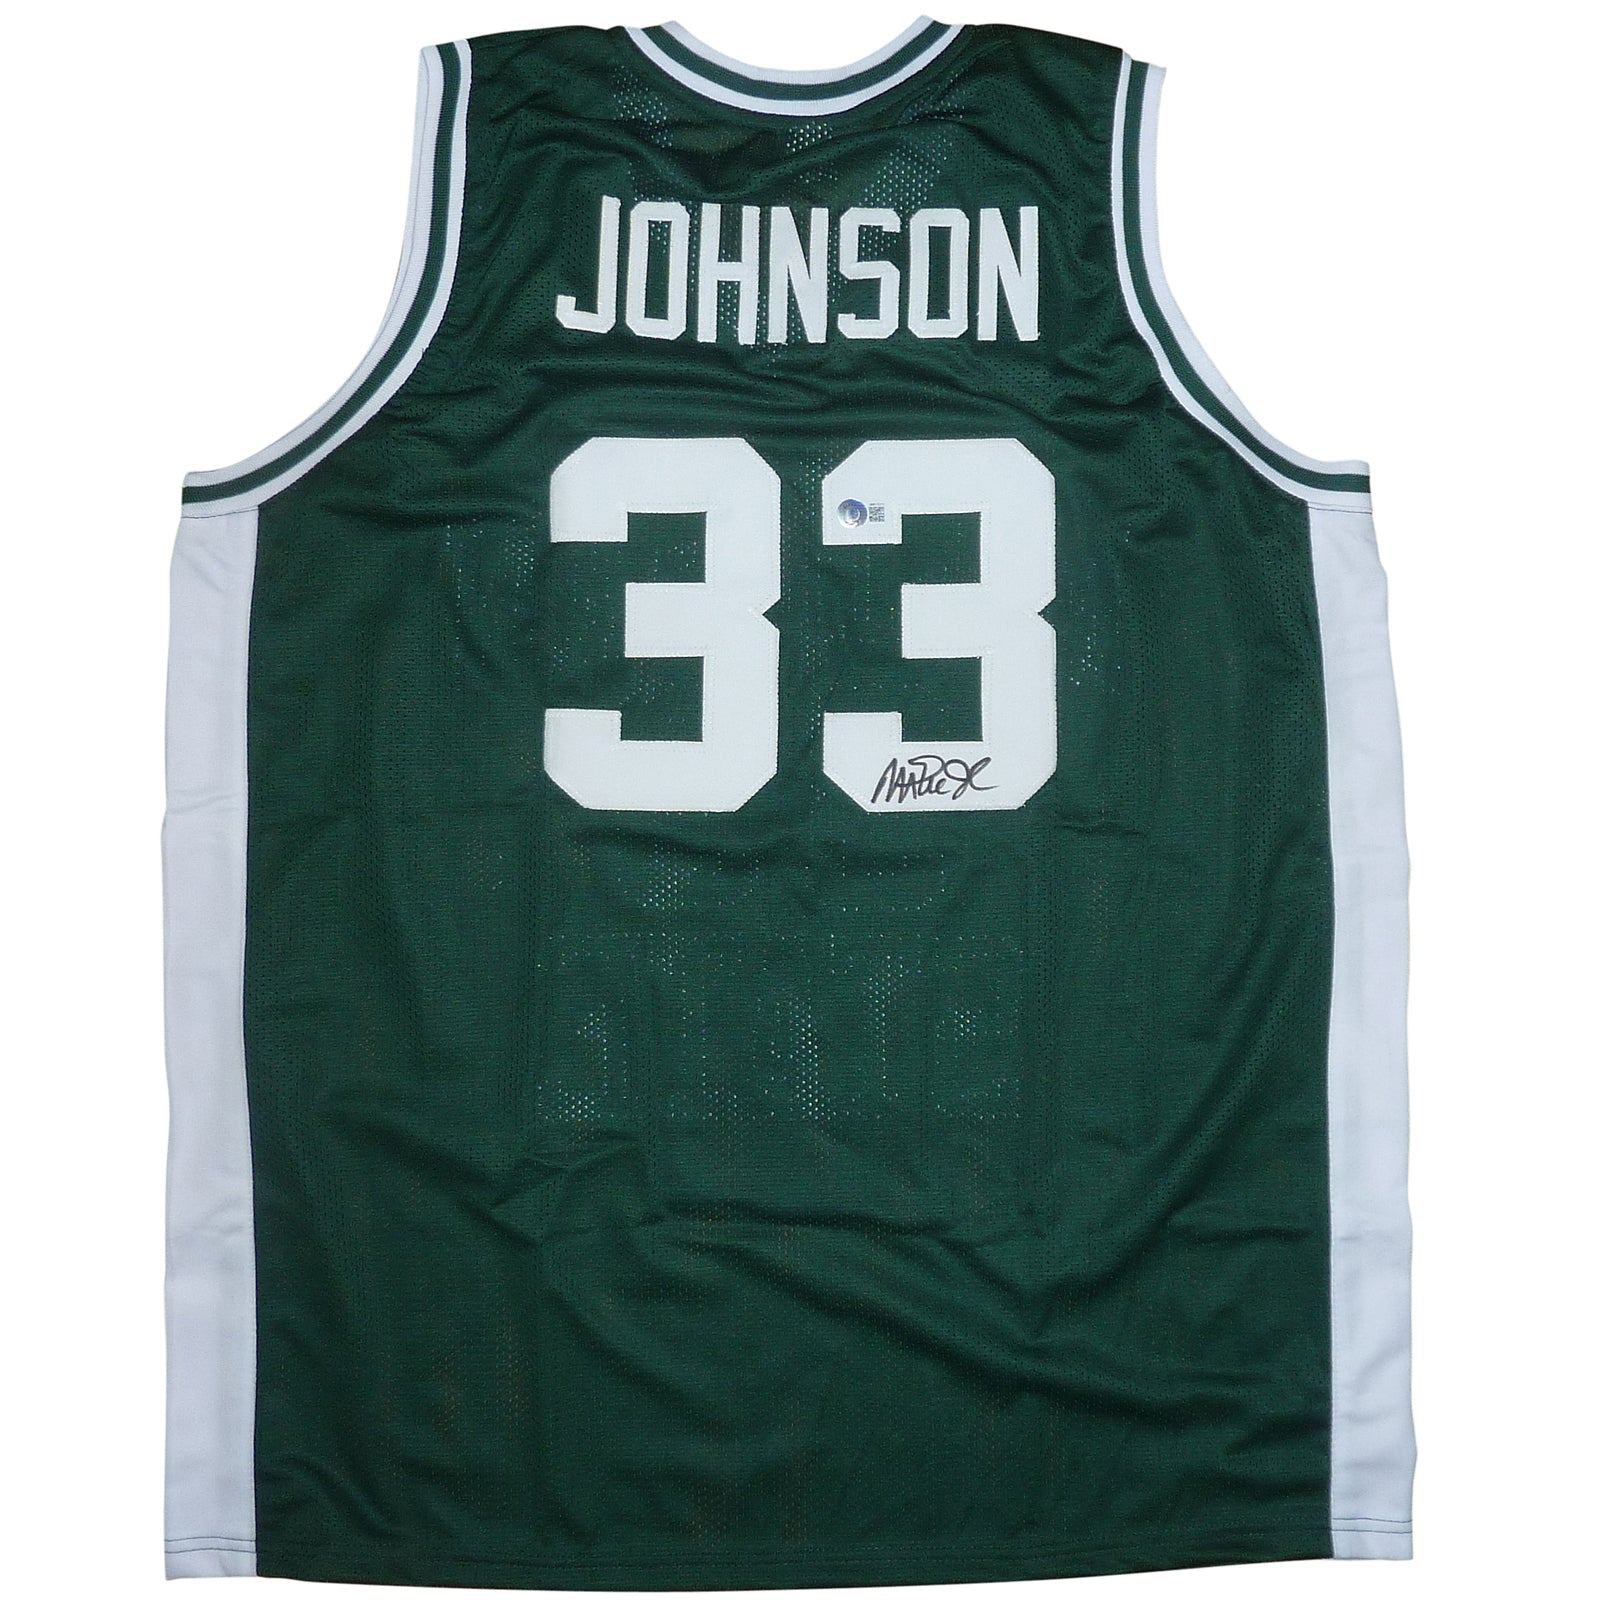 Magic Johnson Autographed Michigan State Spartans (Green #33) Custom Jersey - Beckett